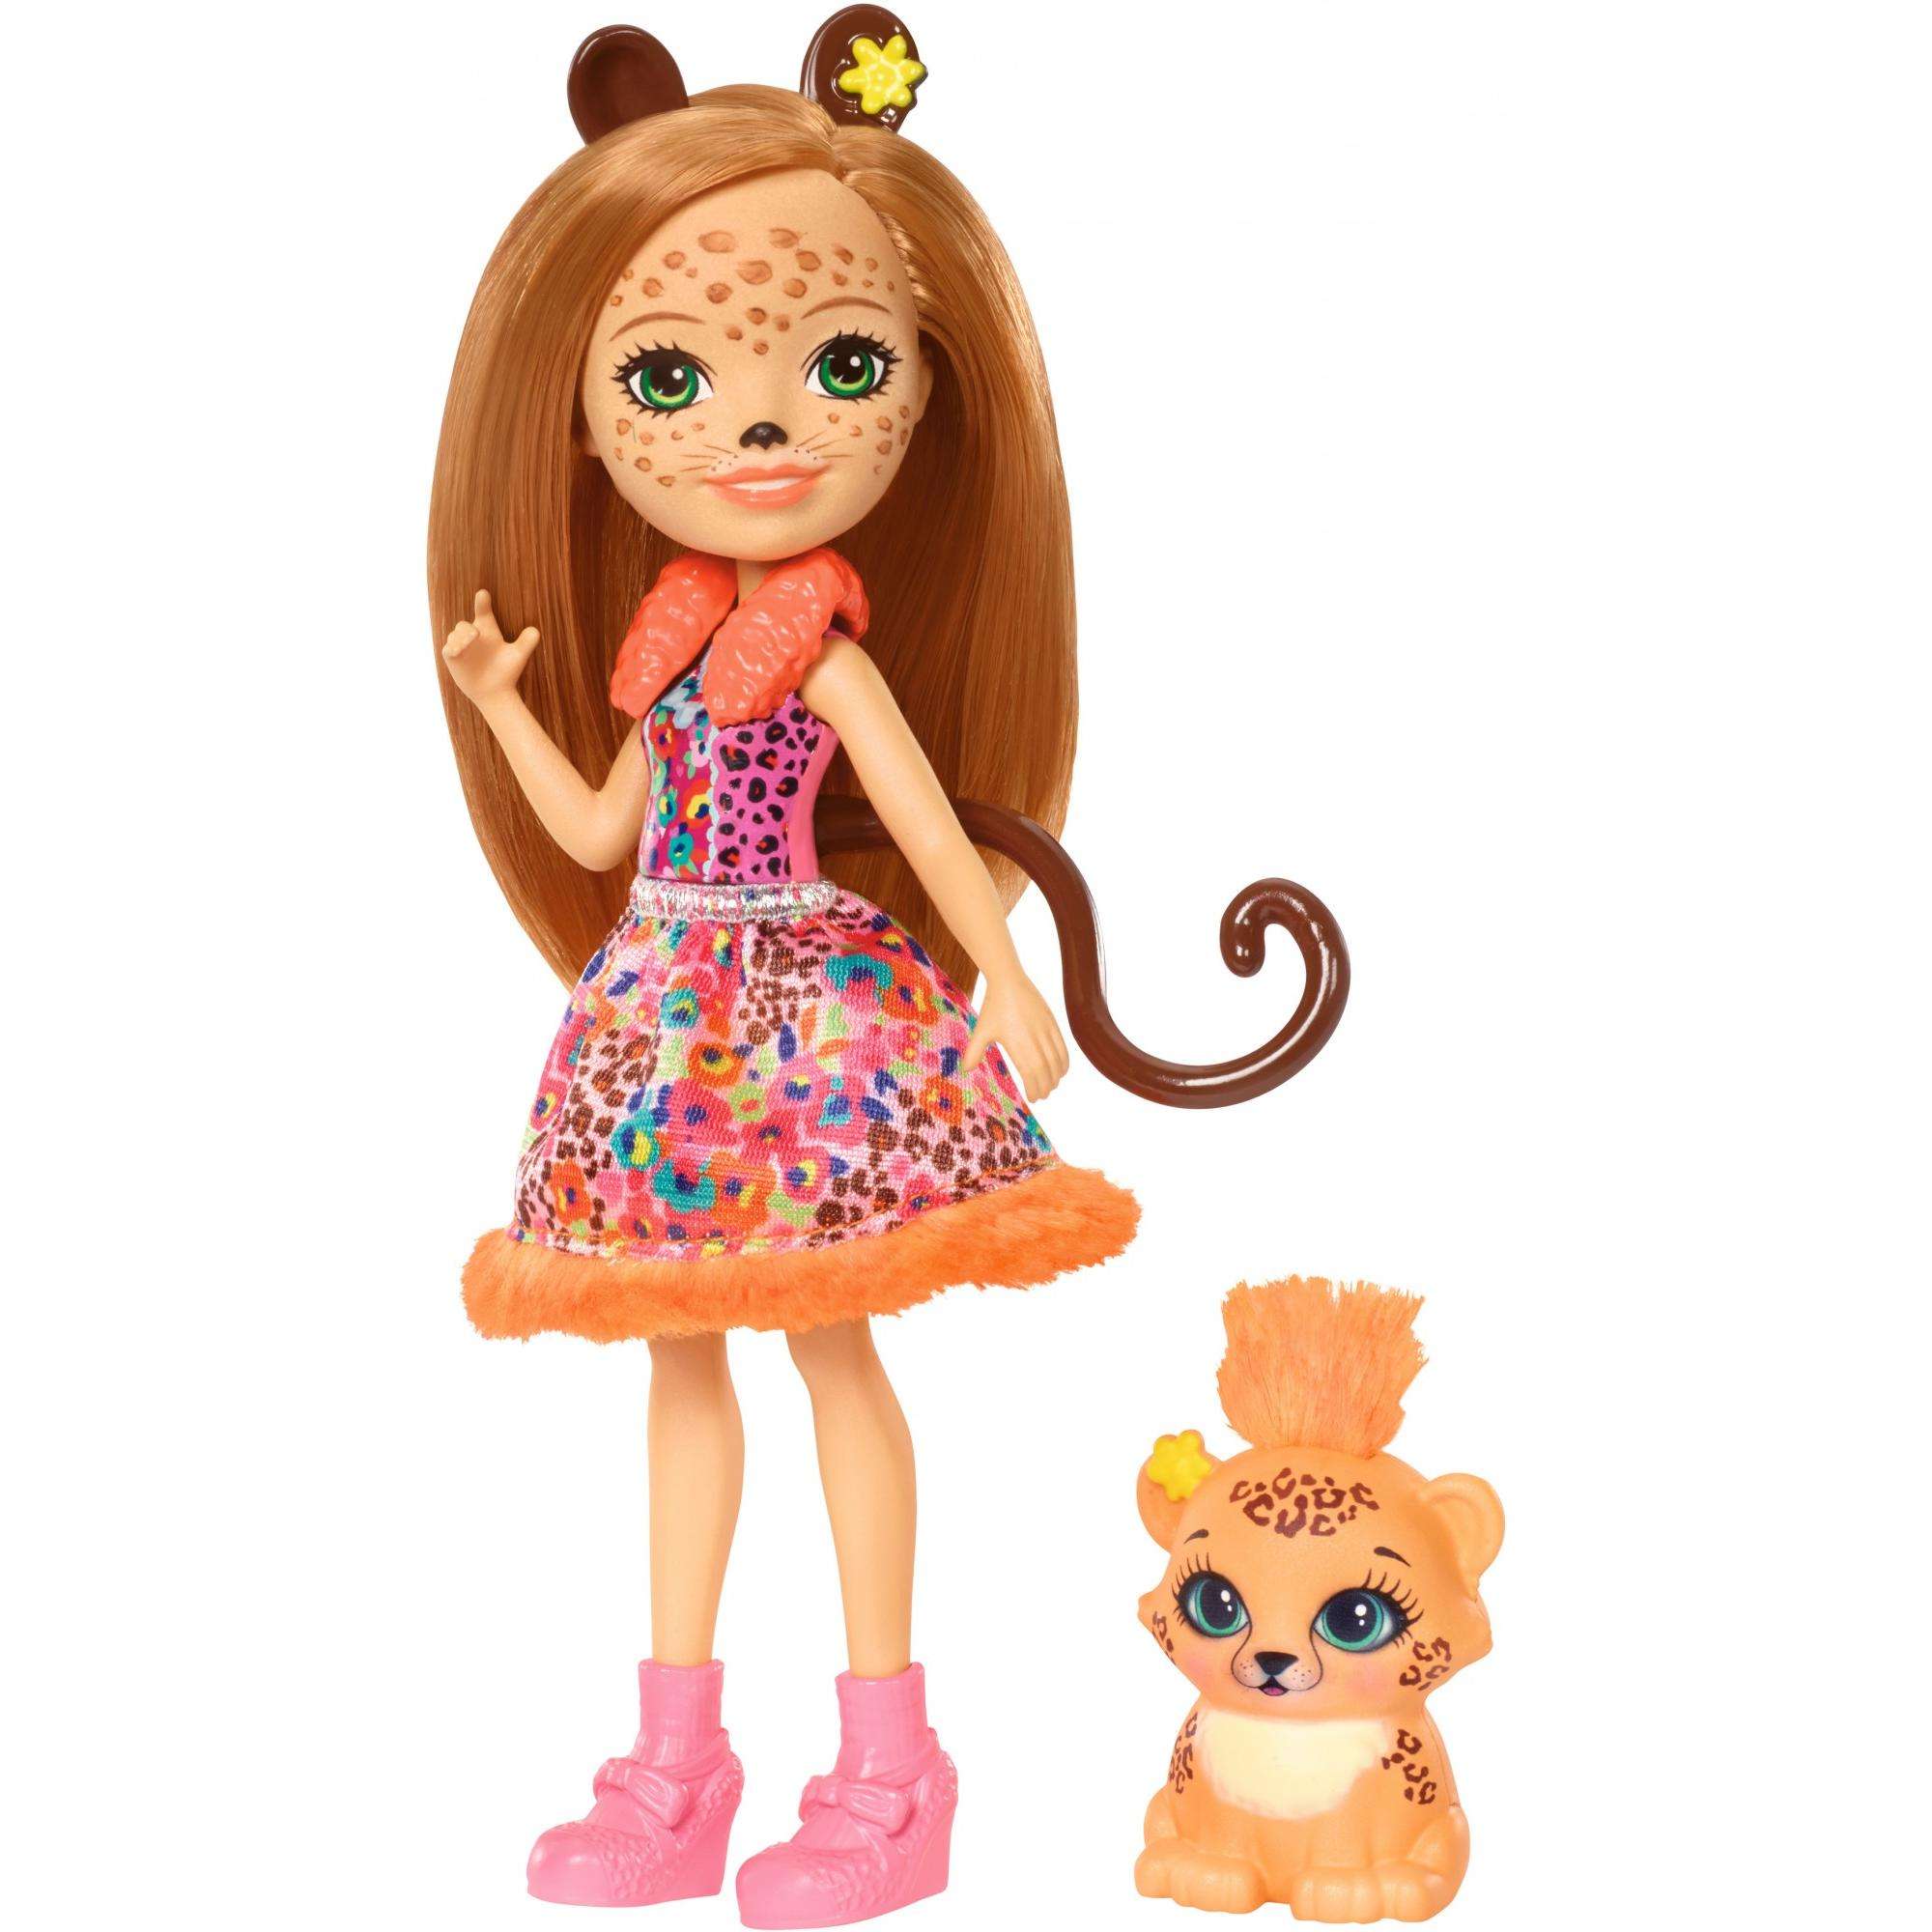 Enchantimals Cherish Cheetah Doll & Quick-Quick Cheetah Friend Figures - image 1 of 6